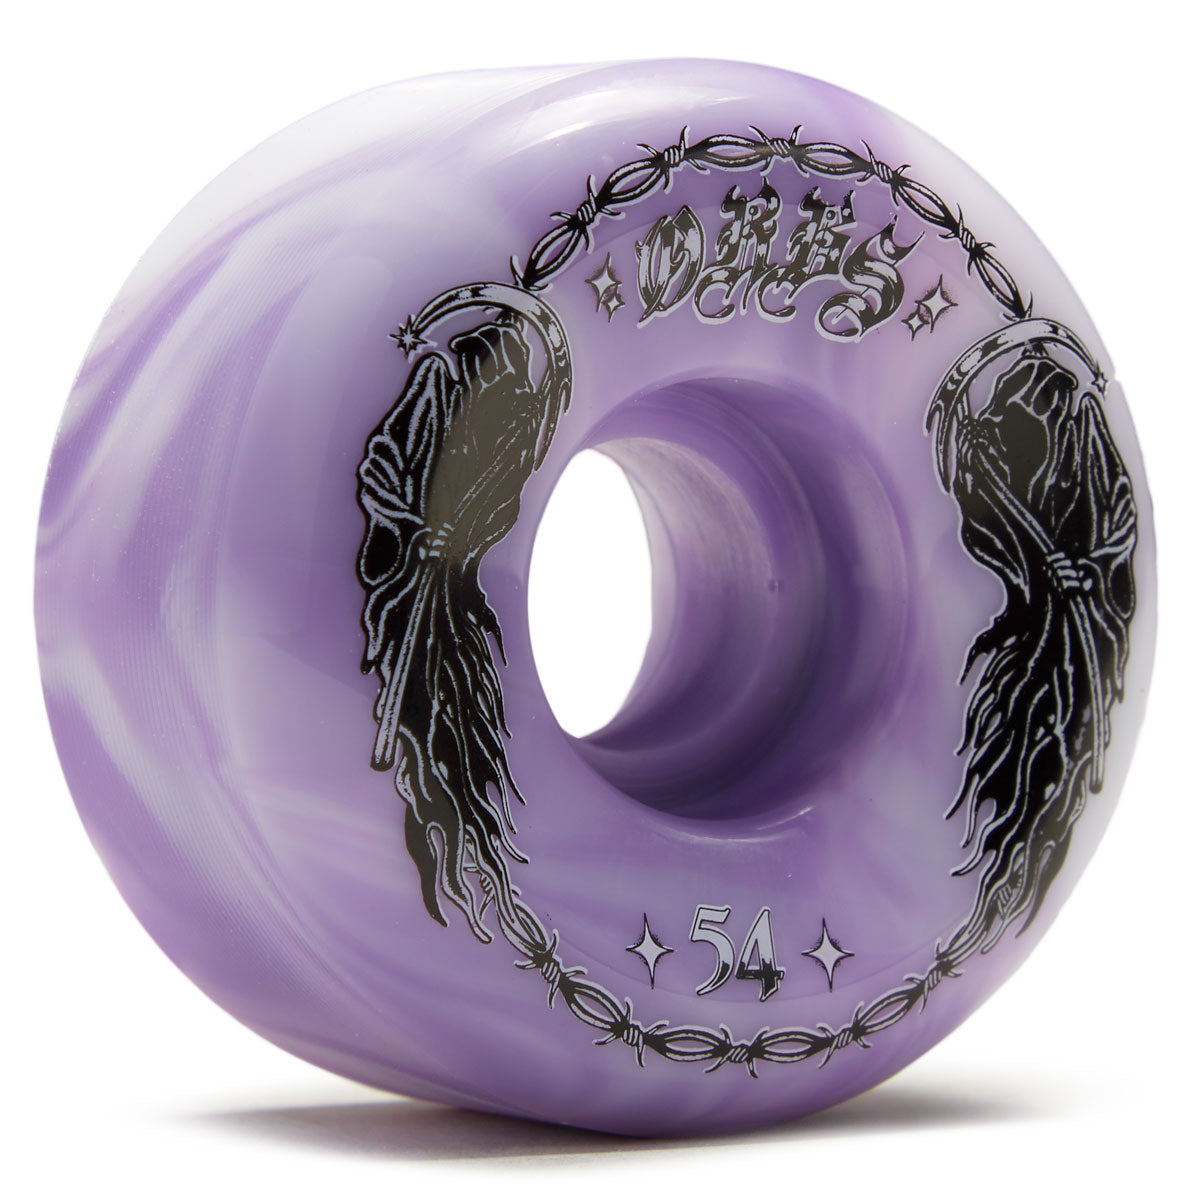 Welcome Orbs Specters '23 Conical 99A Skateboard Wheels - Purple/White Swirl - 54mm image 1